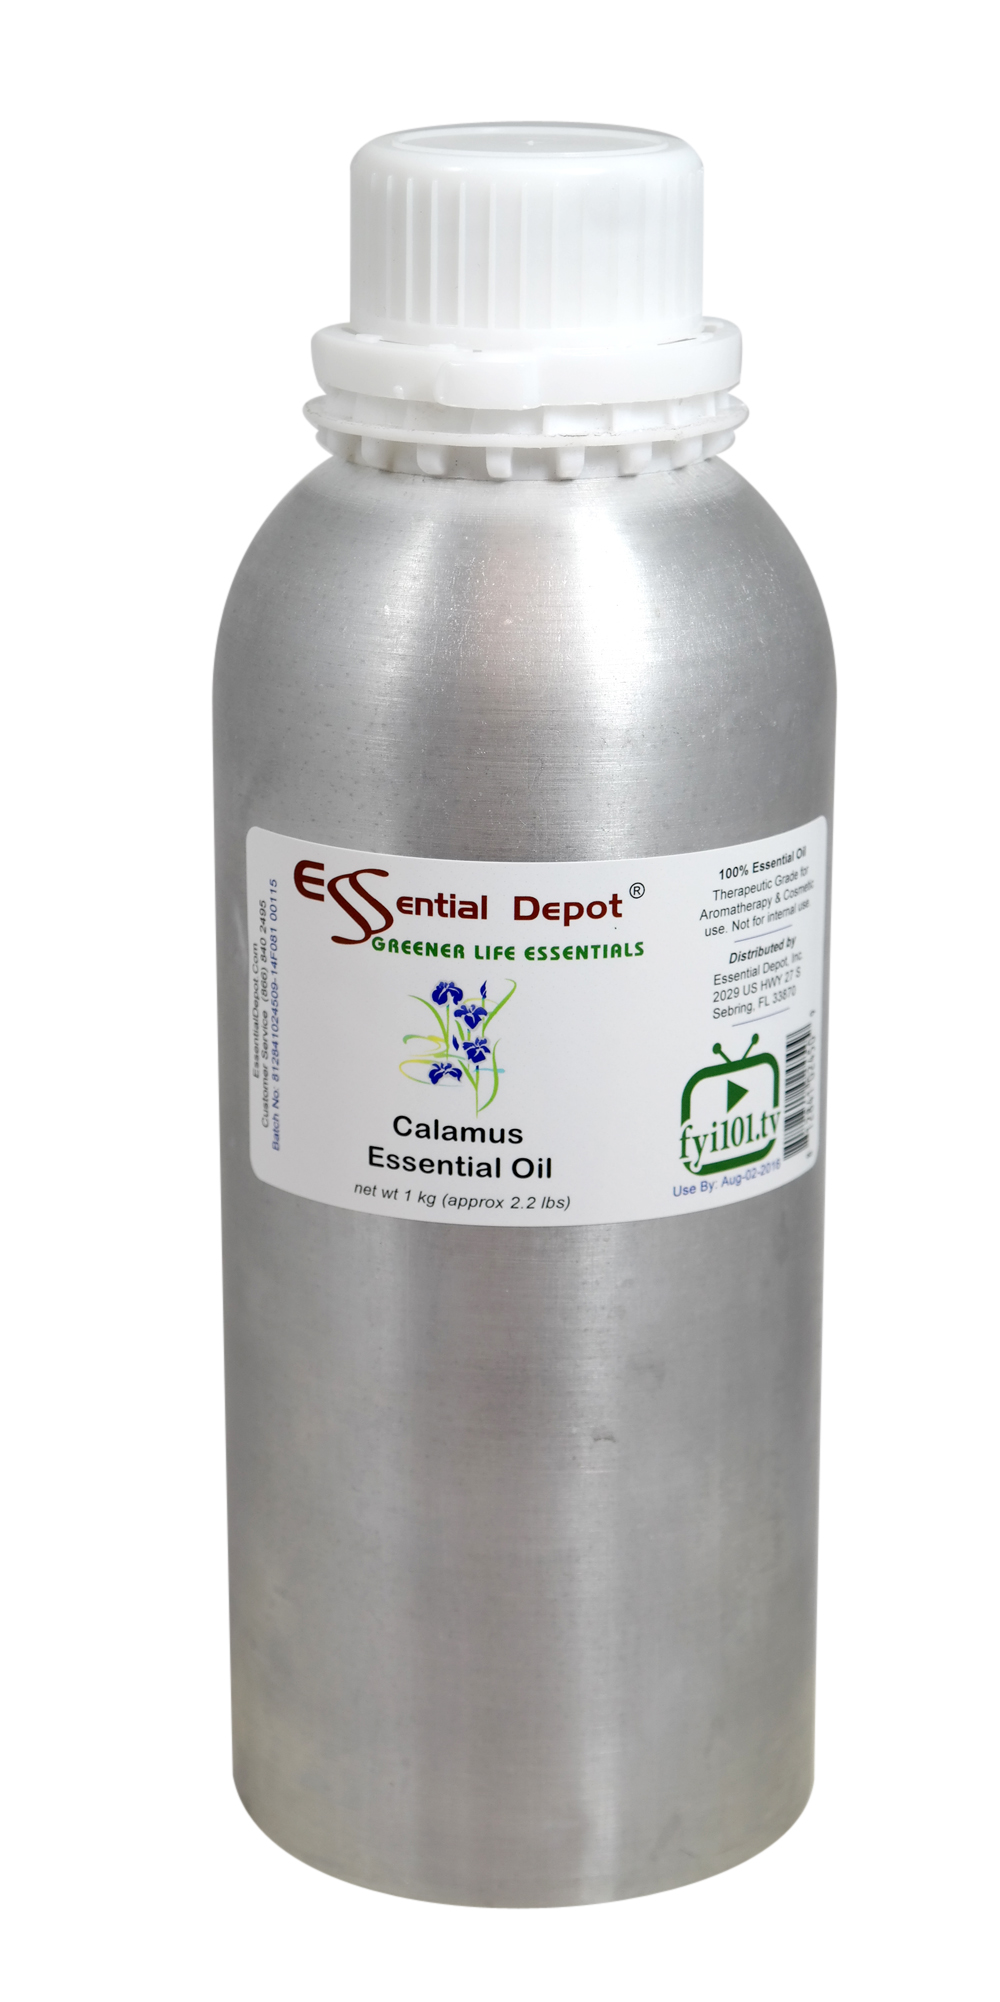 Calamus Essential Oil - 1 kg. - Approx 2.2 lbs. - FREE US SHIPPING